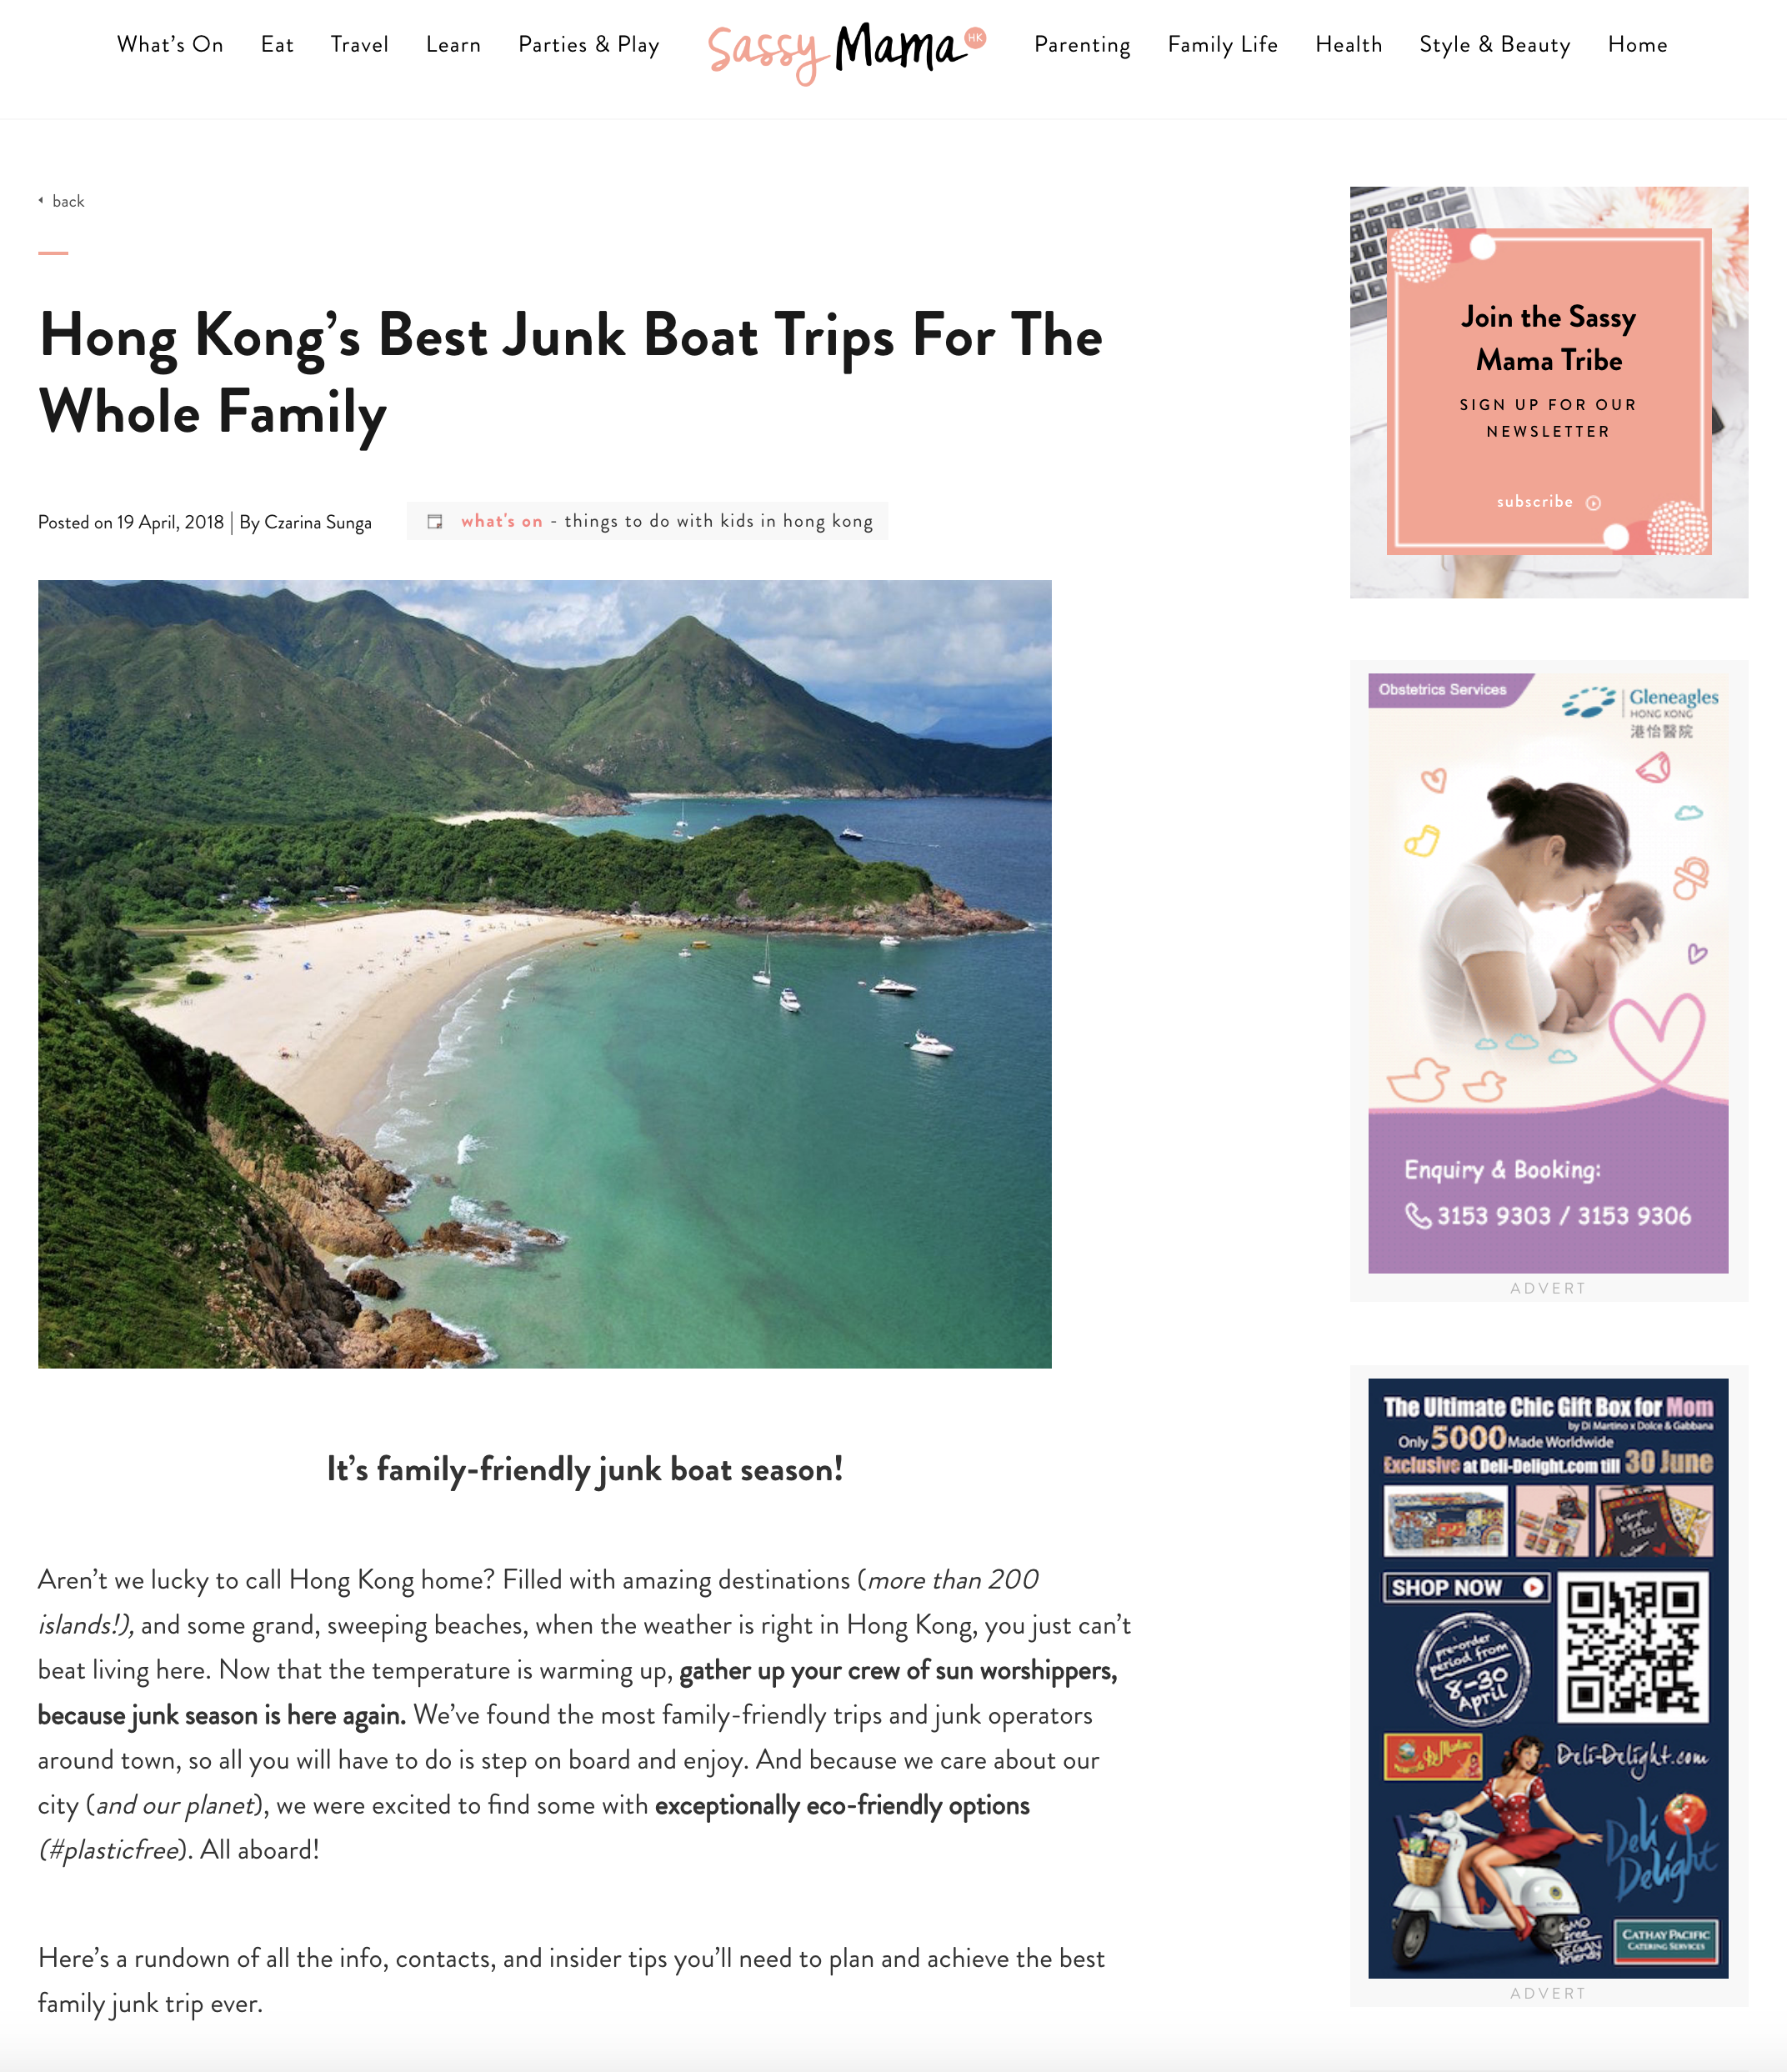 book captain ryan for your hong kong junk adventure